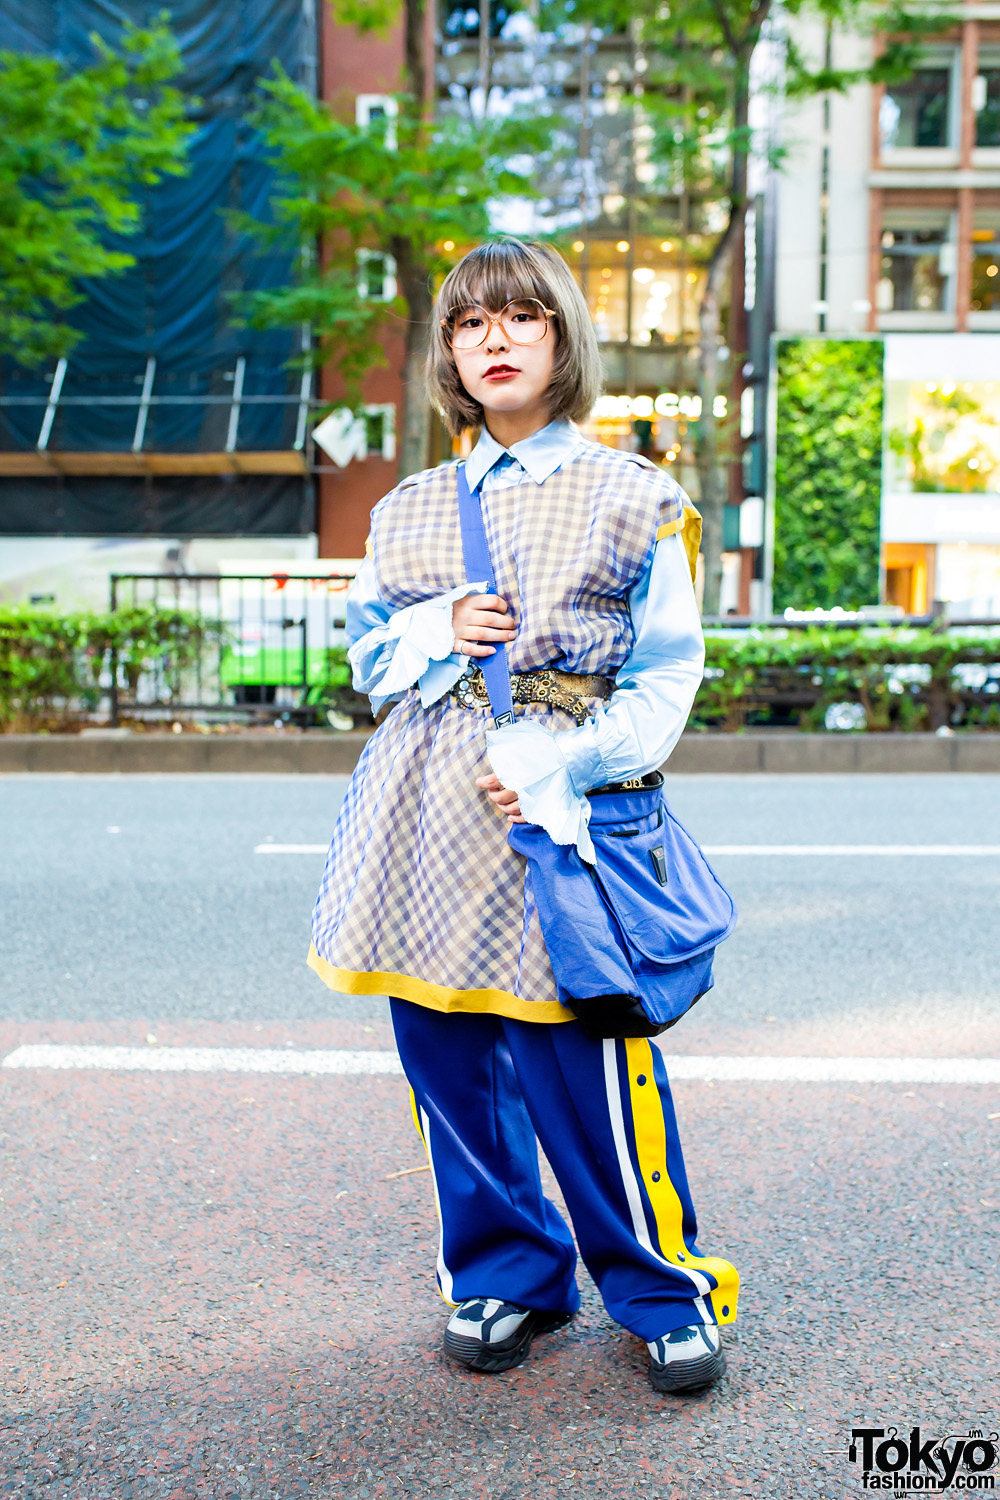 Streetwear Style in Harajuku w/ Fringed Bob, Ne-Net Smock Dress, Nike Track Pants, Vintage Bag & Urban Rider Sneakers